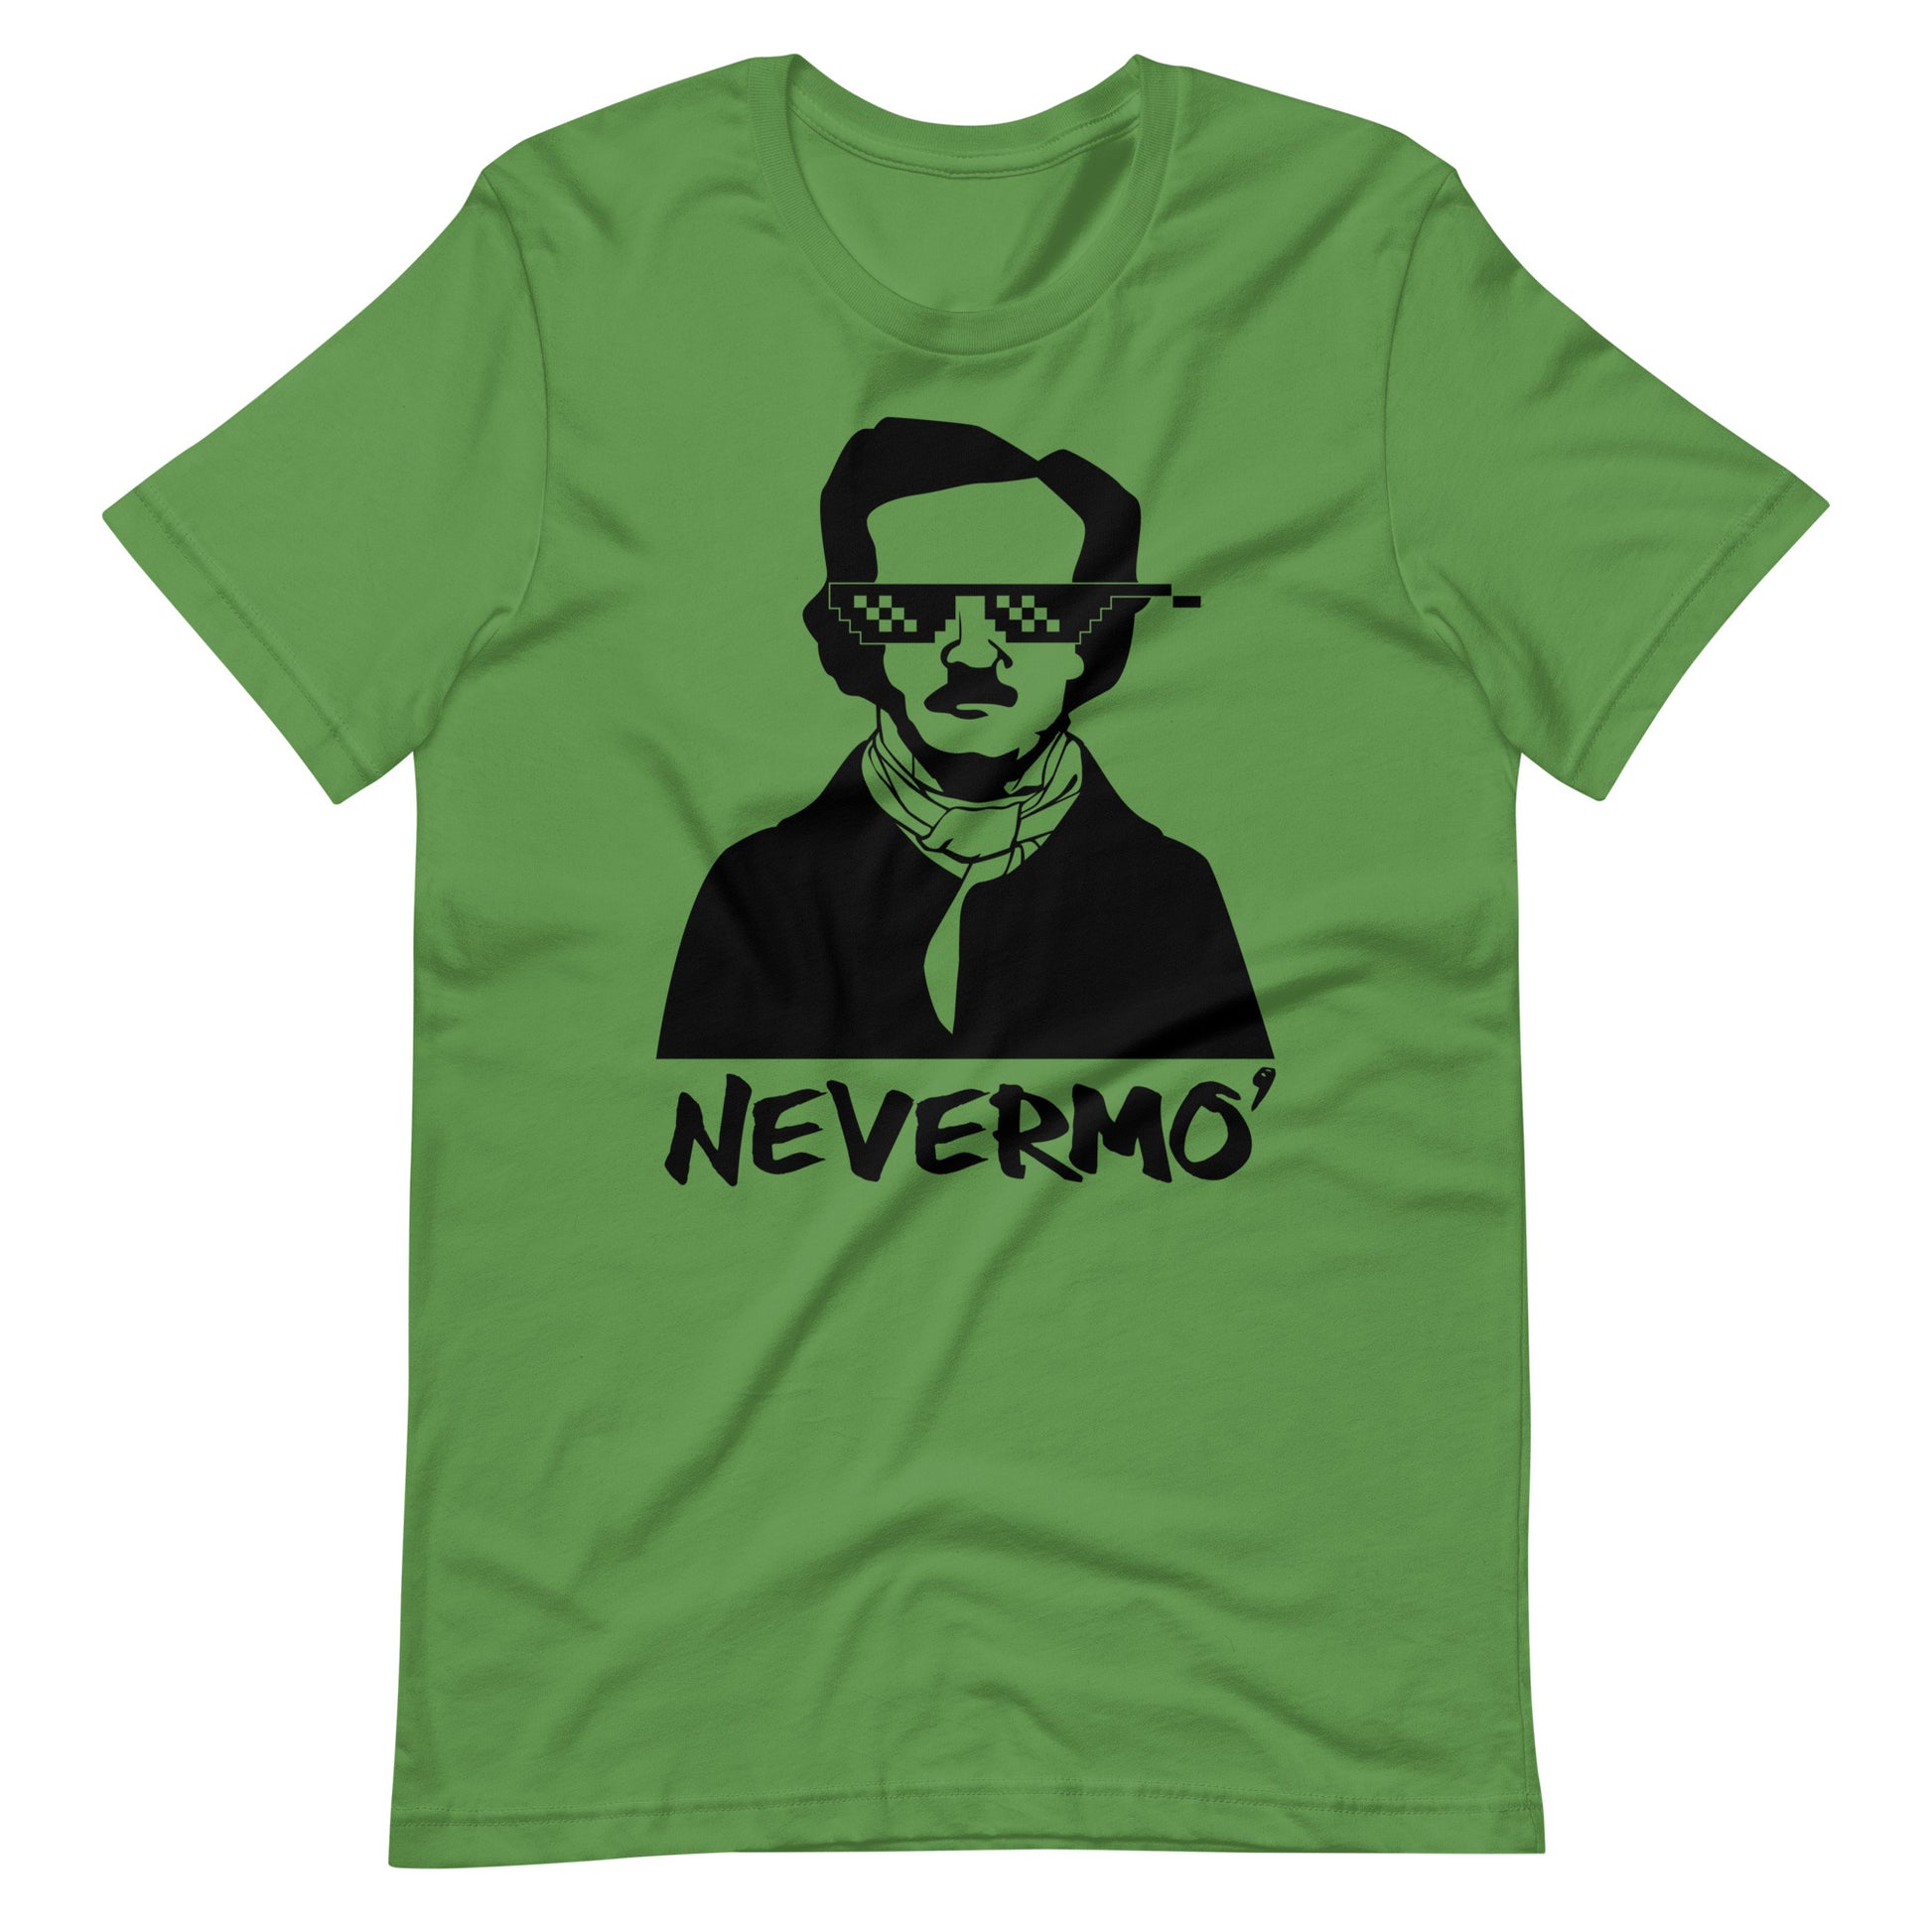 Women's Edgar Allan Poe "Nevermo" t-shirt - Leaf Front